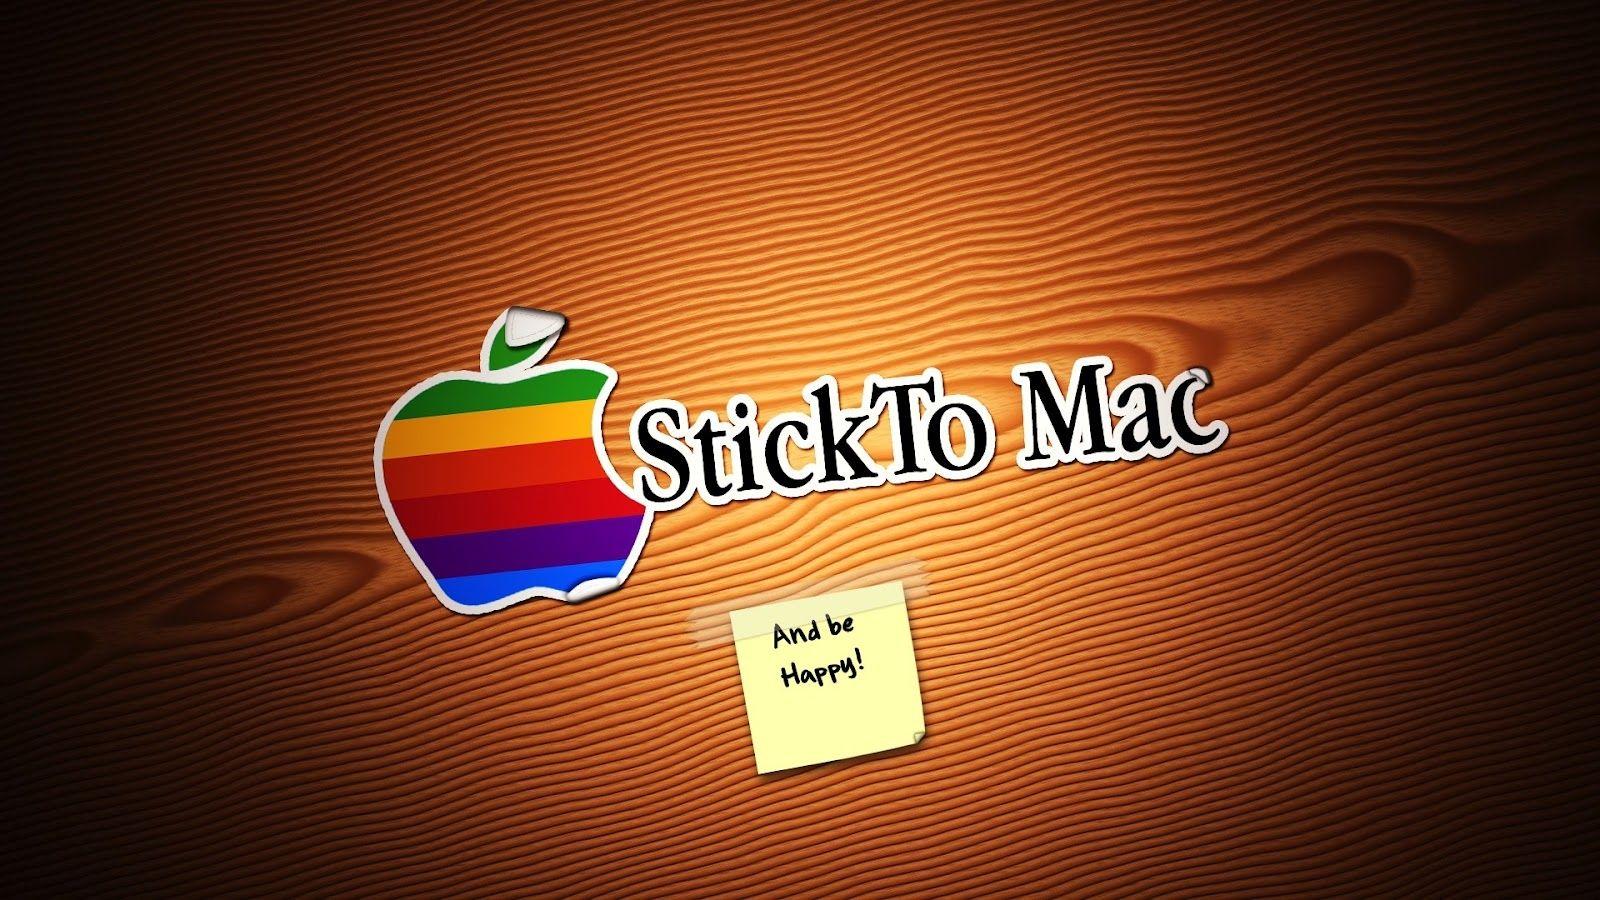 Cool Apple Mac HD Wallpaper Background. Download cool HD wallpaper